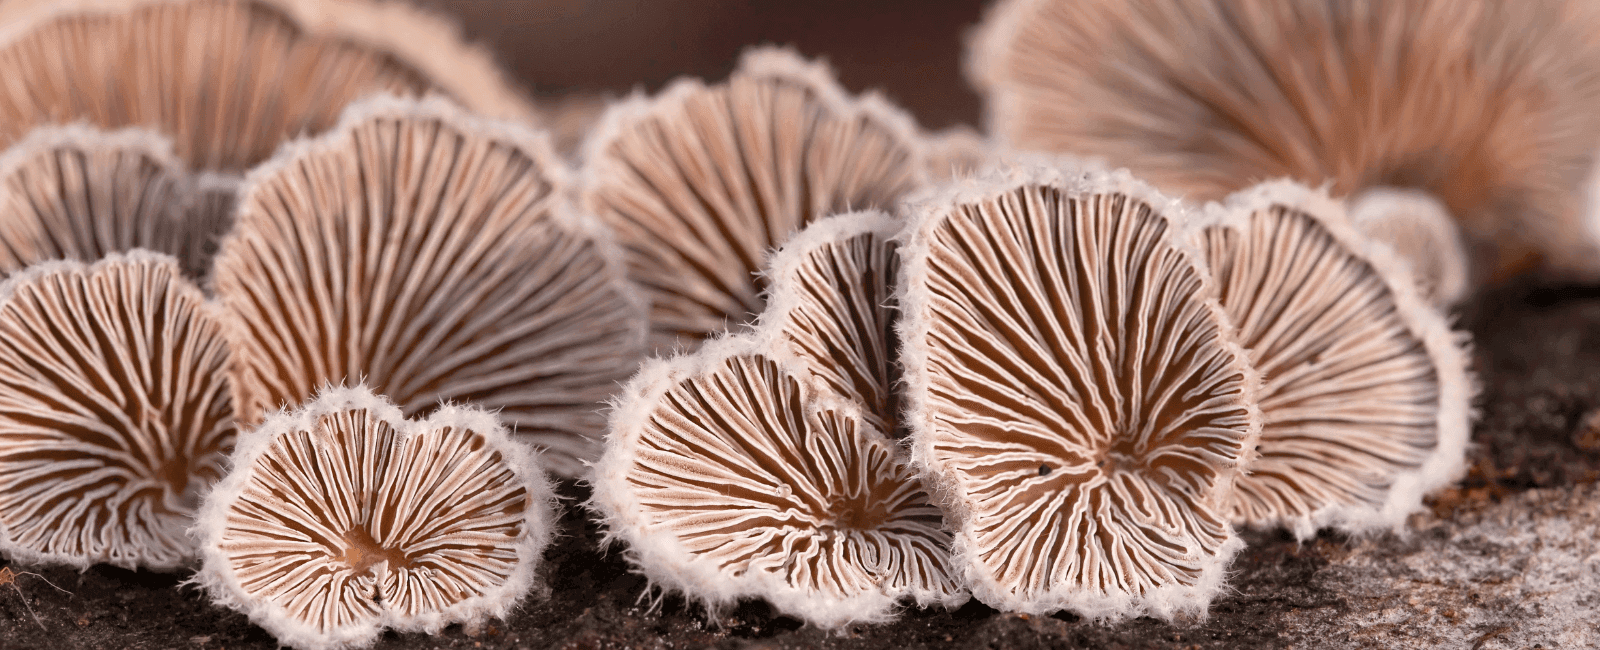 The Split Gill Mushroom Has More Than 23,000 Sexes